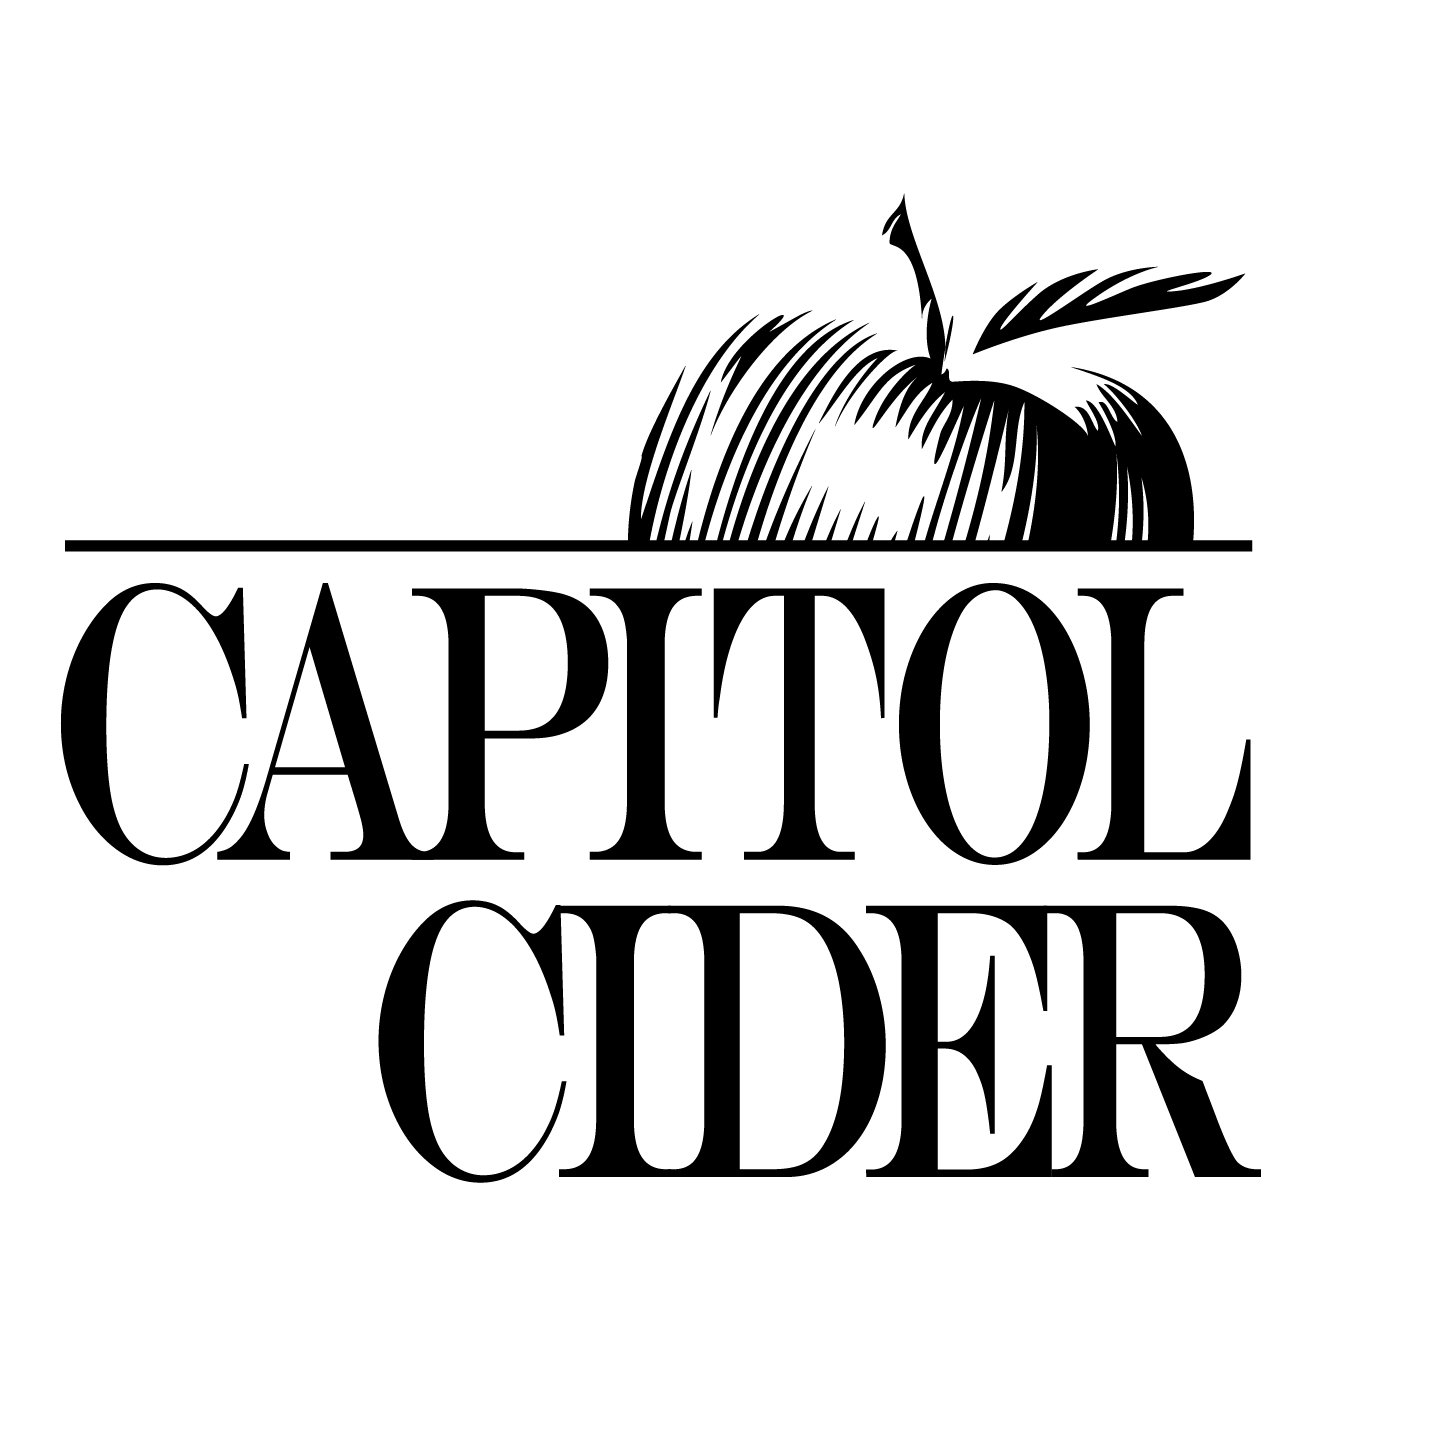 Capitol Cider.png